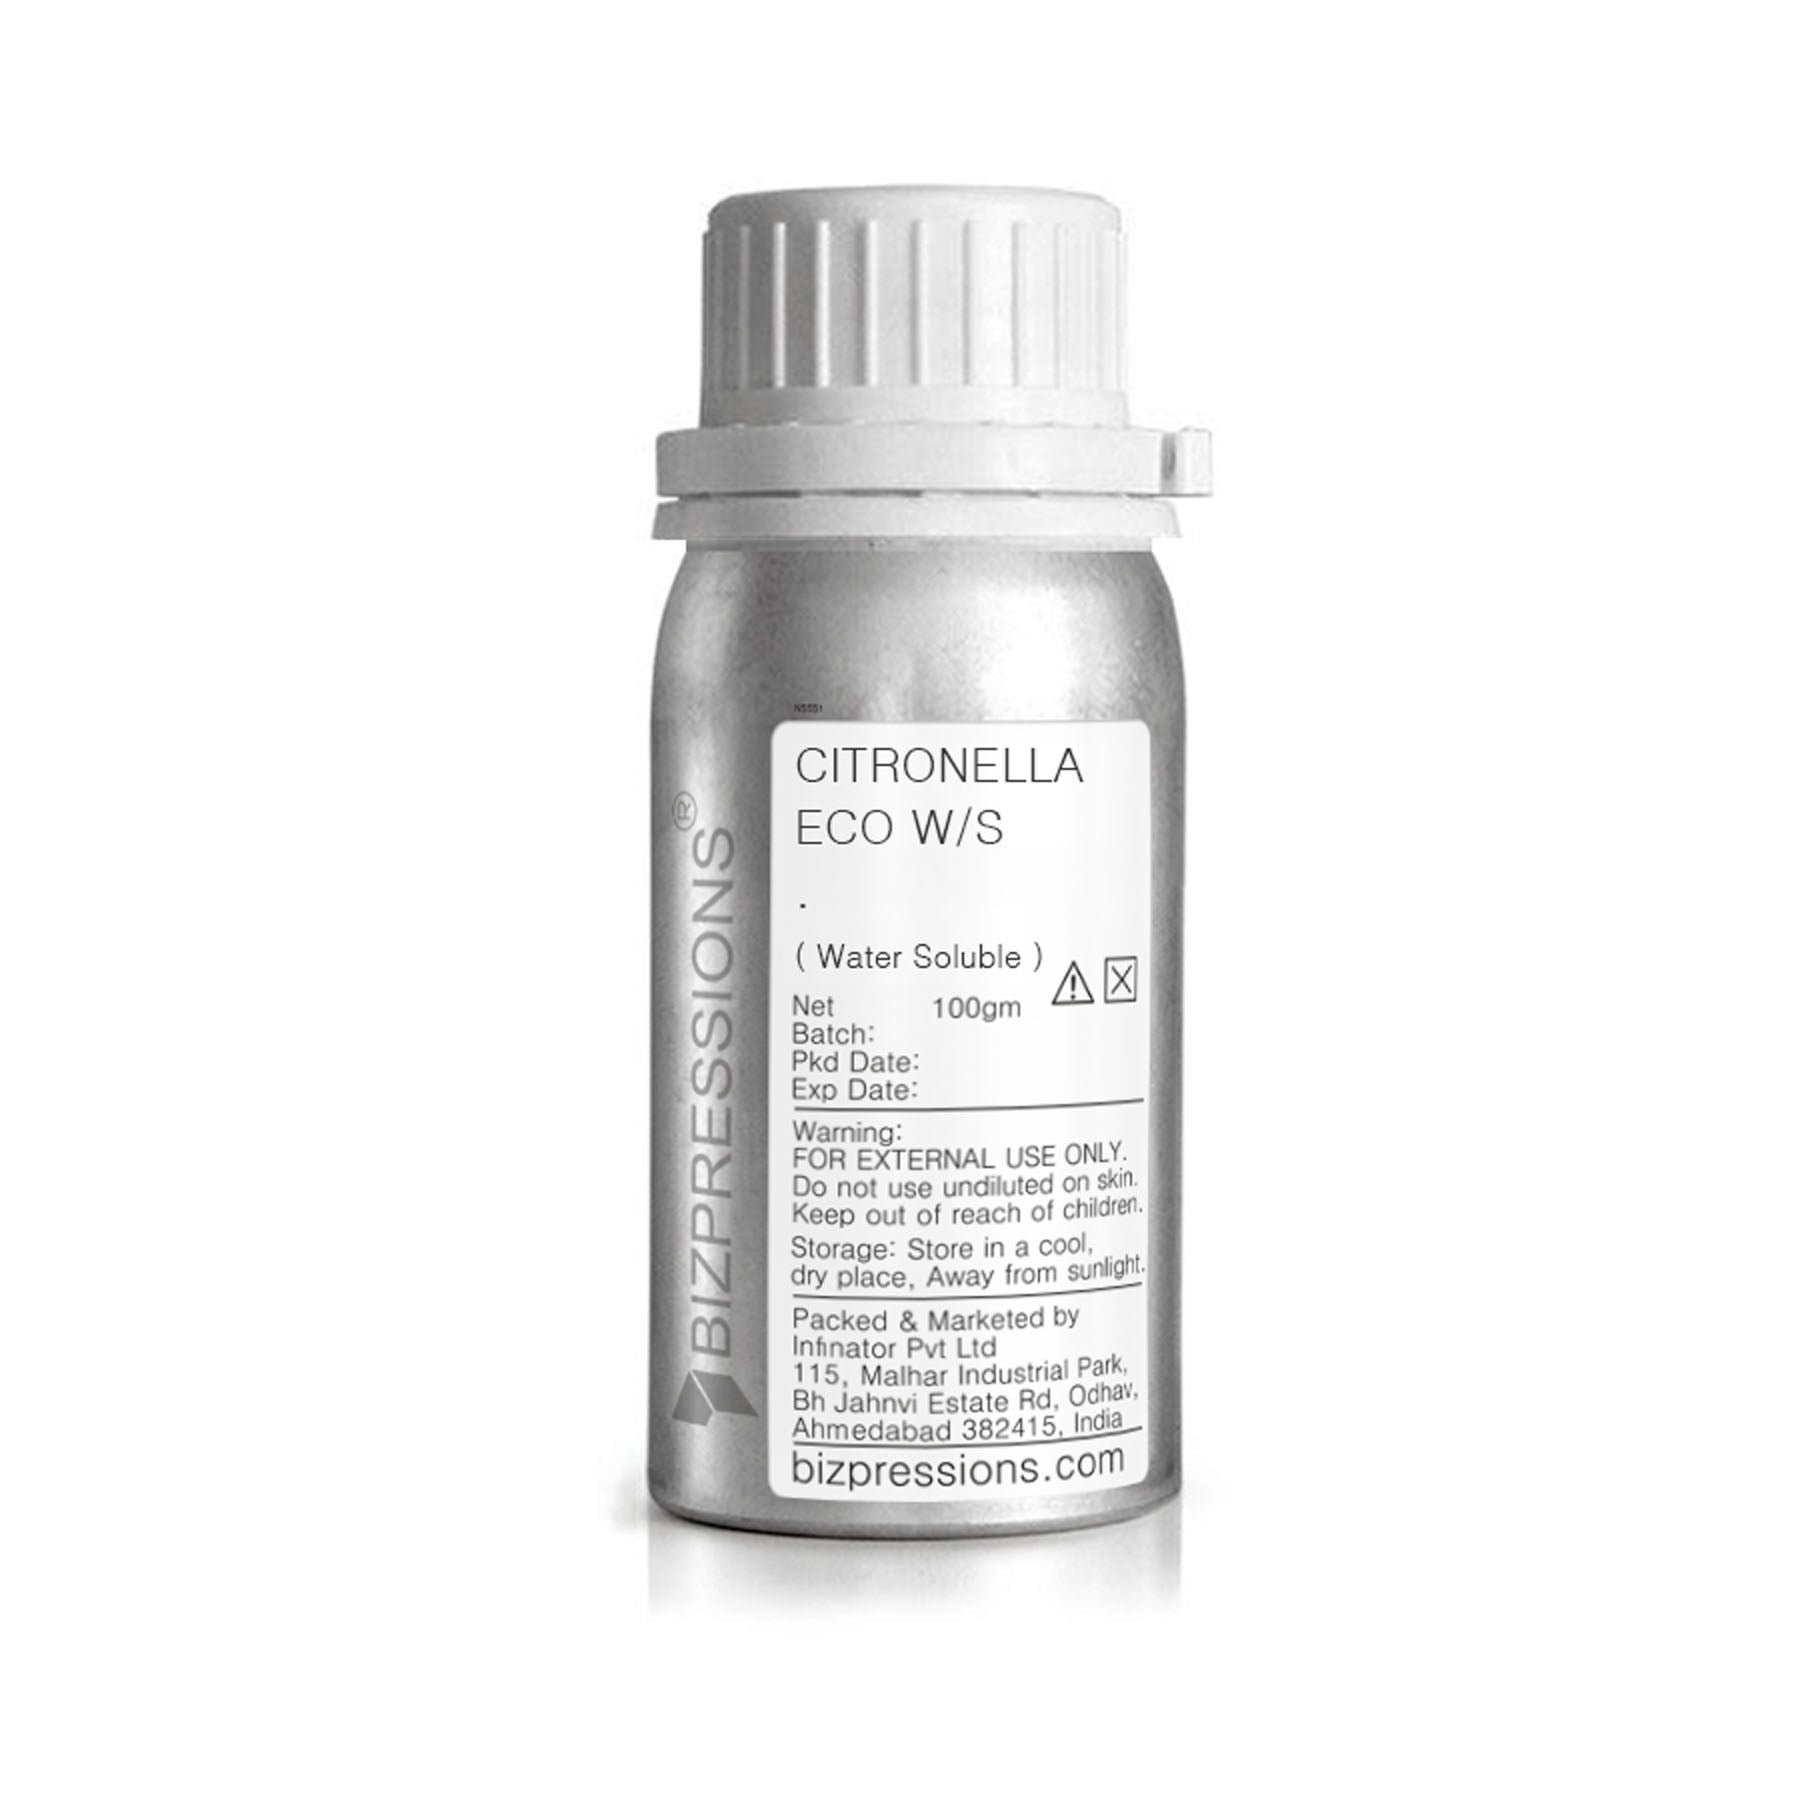 CITRONELLA ECO W/S - Fragrance ( Water Soluble ) - 100 gm